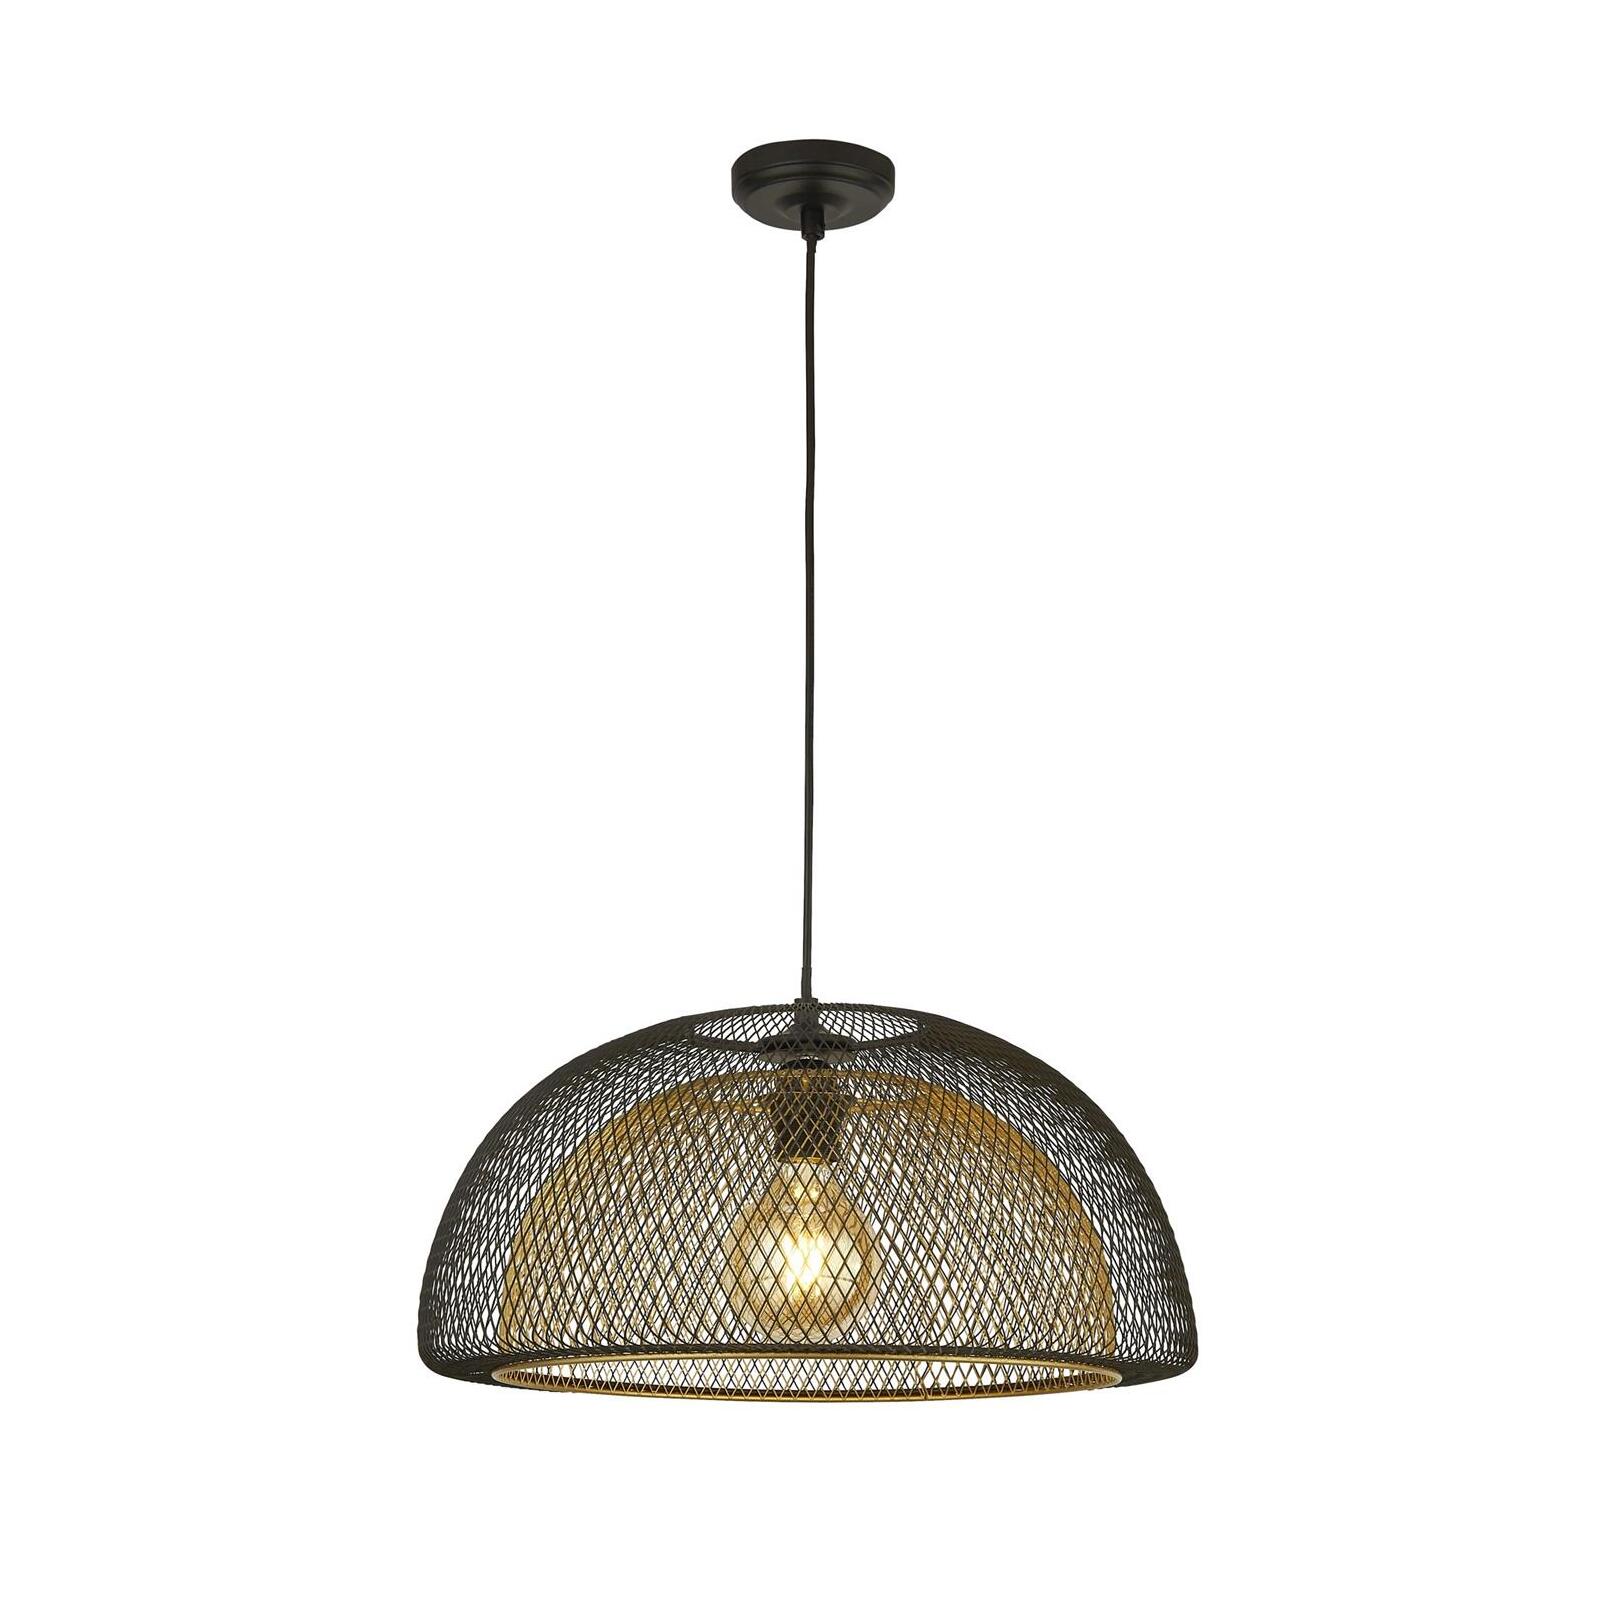 Honeycomb Pendelleuchte mit Doppelschirm Metall Gitter schwarz gold 45,5cm  E27 - Lampen & Leuchten Onlineshop